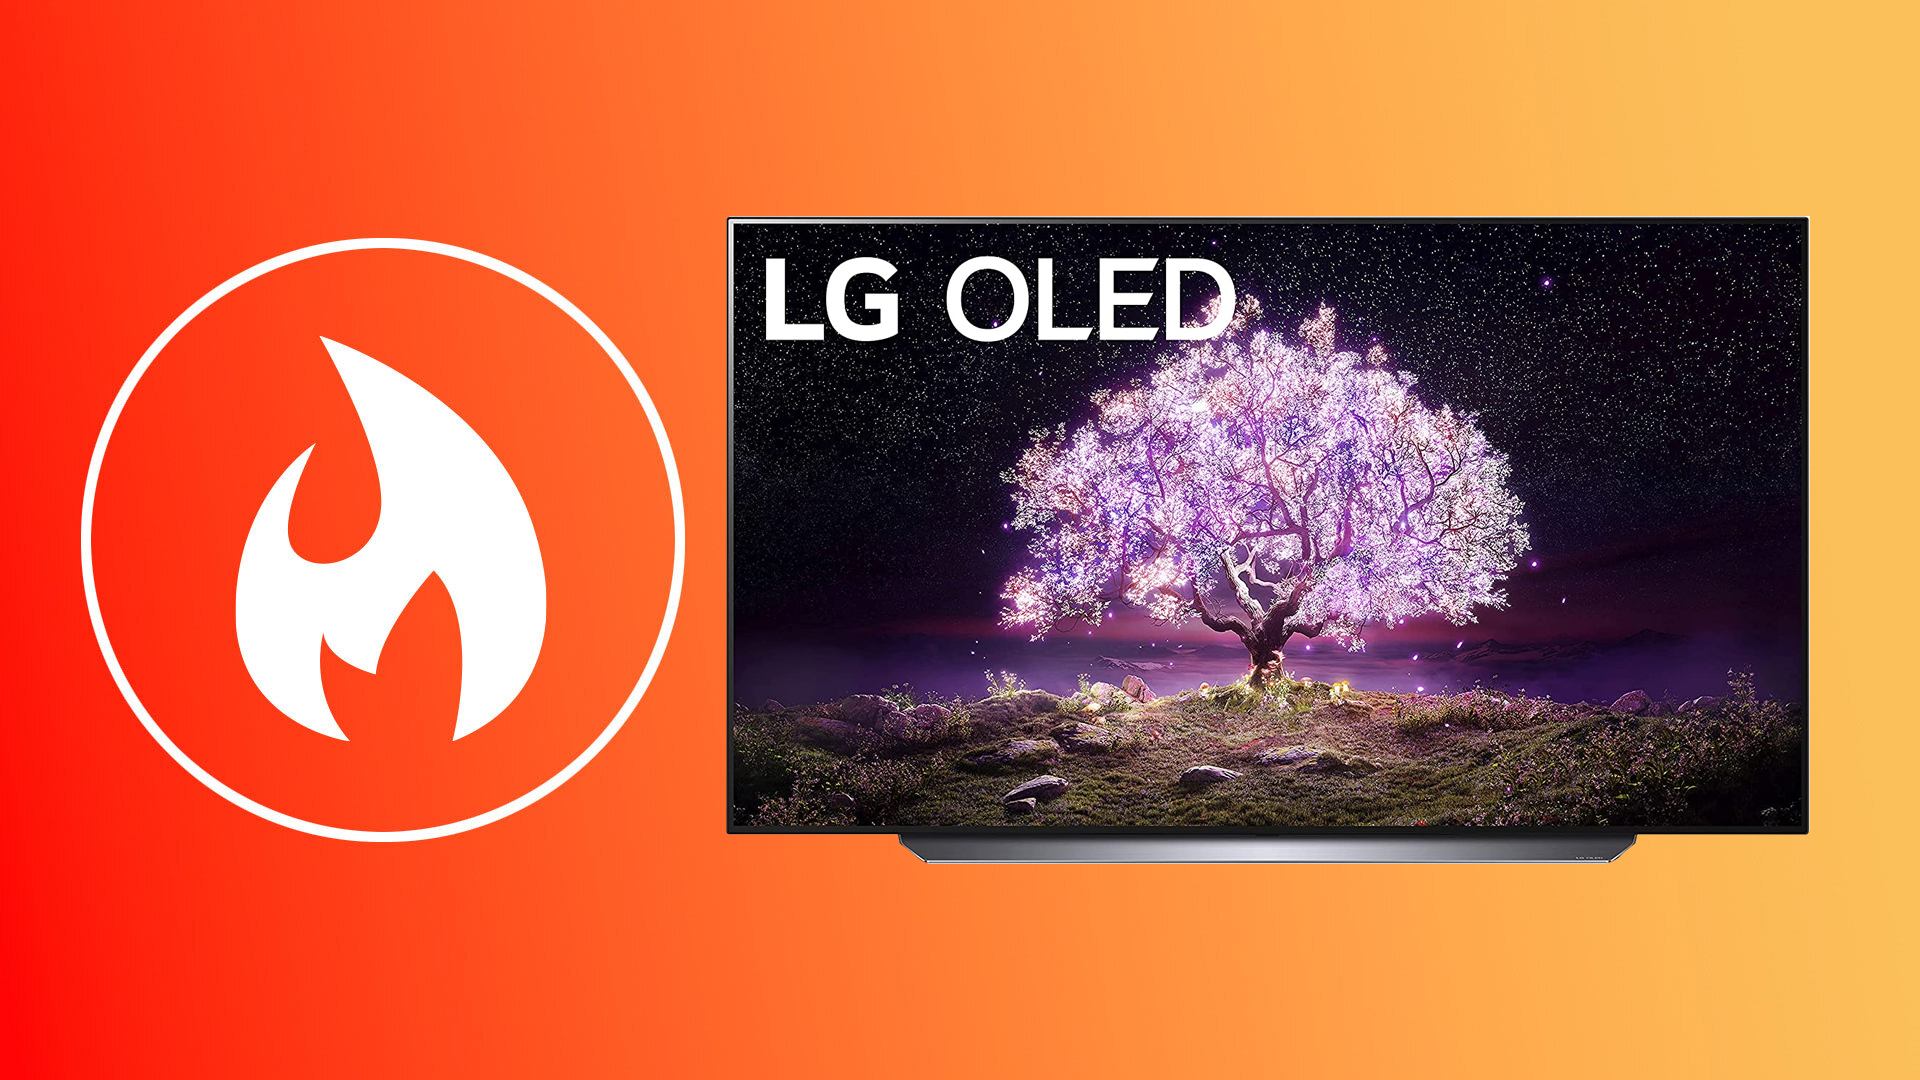 LG C1 on orange background with a flame logo